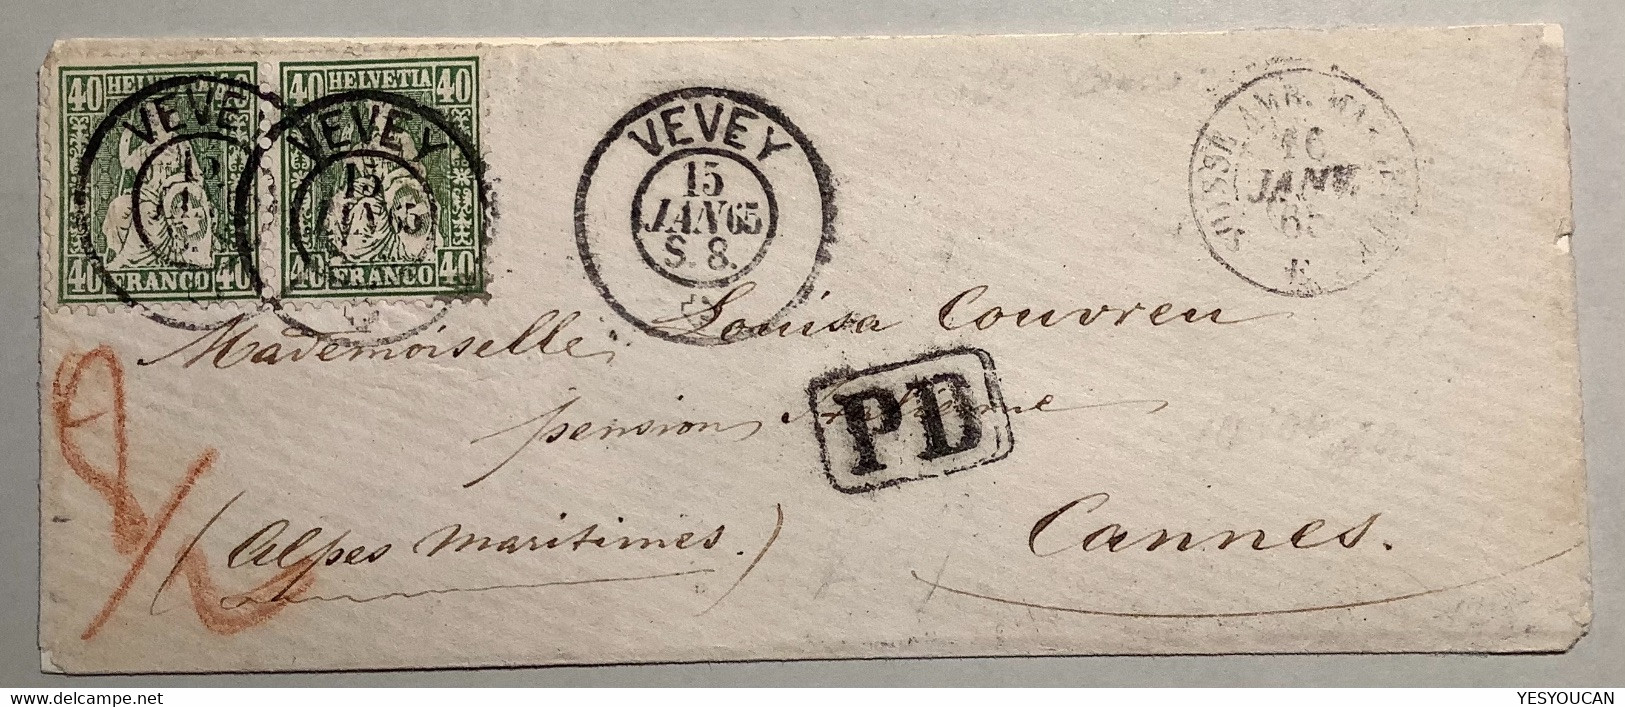 VEVEY 1865 (VD) Brief>Cannes Alpes Maritimes France, ZNr34 X2 1862 Sitzende Helvetia (Schweiz Suisse Lettre Cover - Briefe U. Dokumente